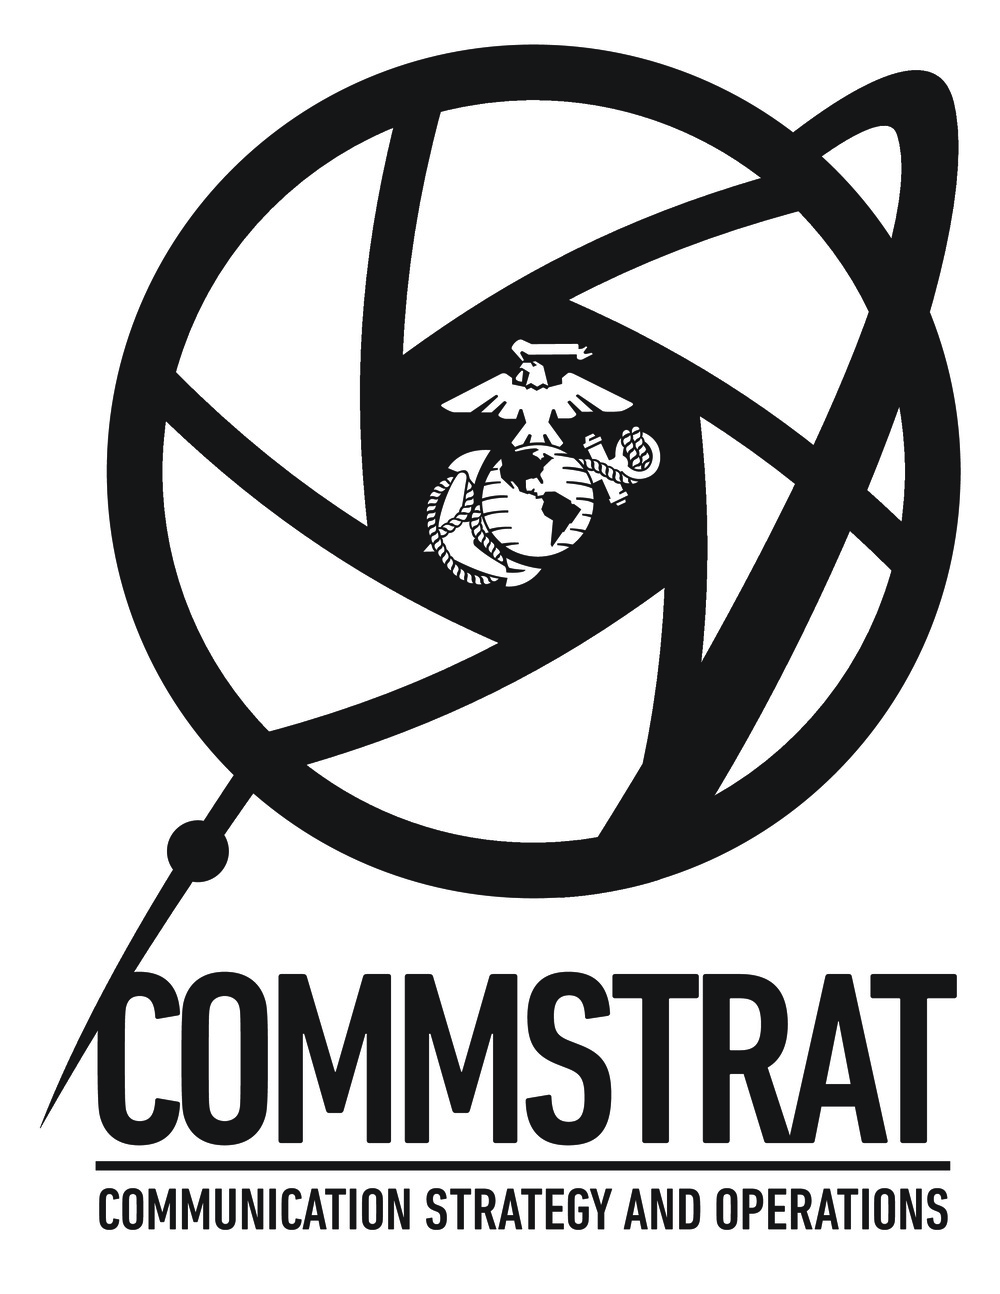 COMMSTRAT Logo 2019 (Black and White)